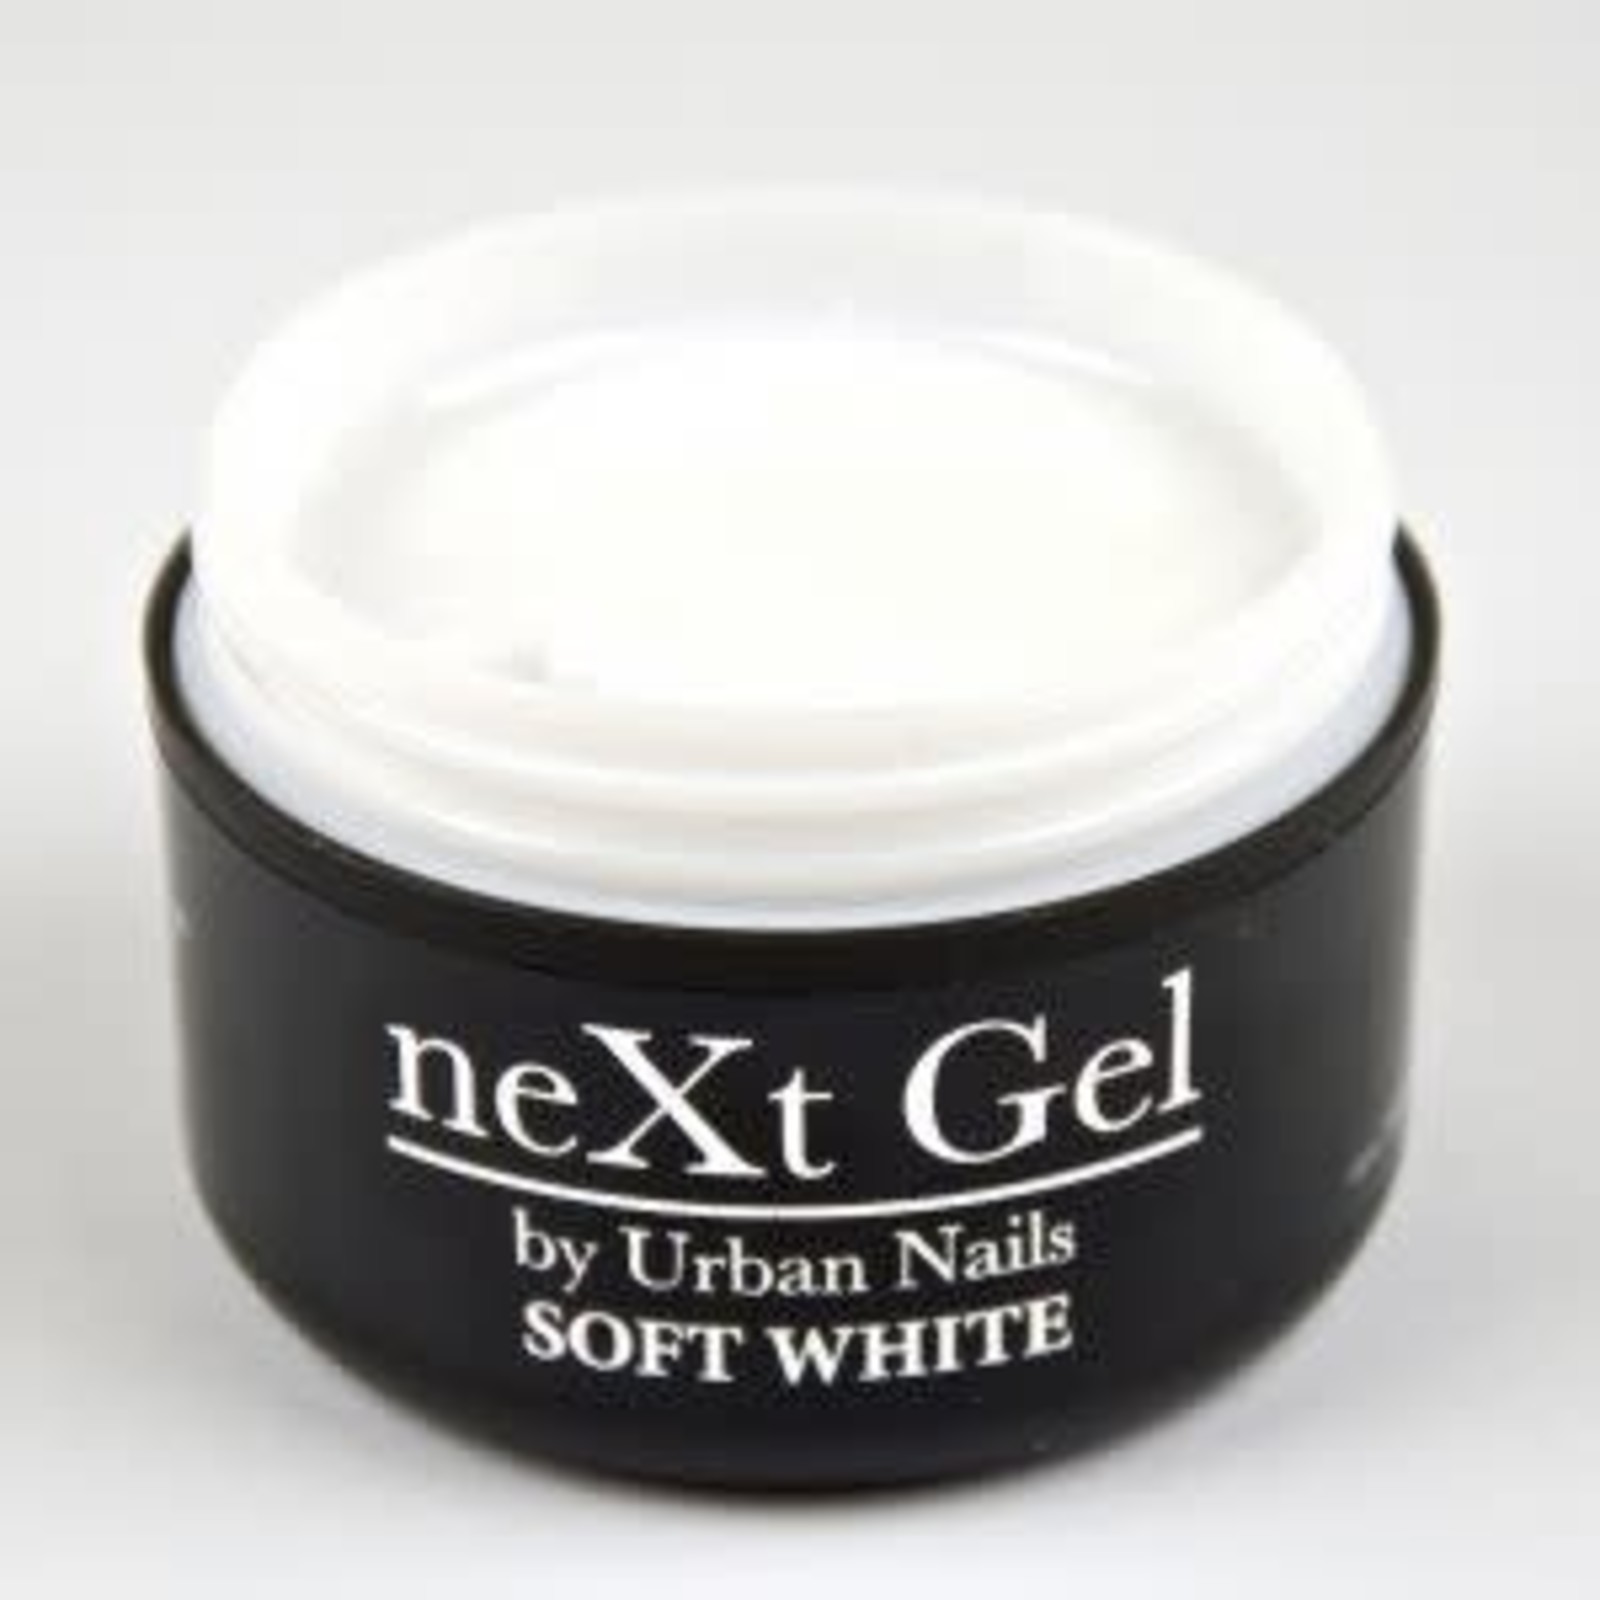 Urban nails NeXt Gel Soft White 50 gr